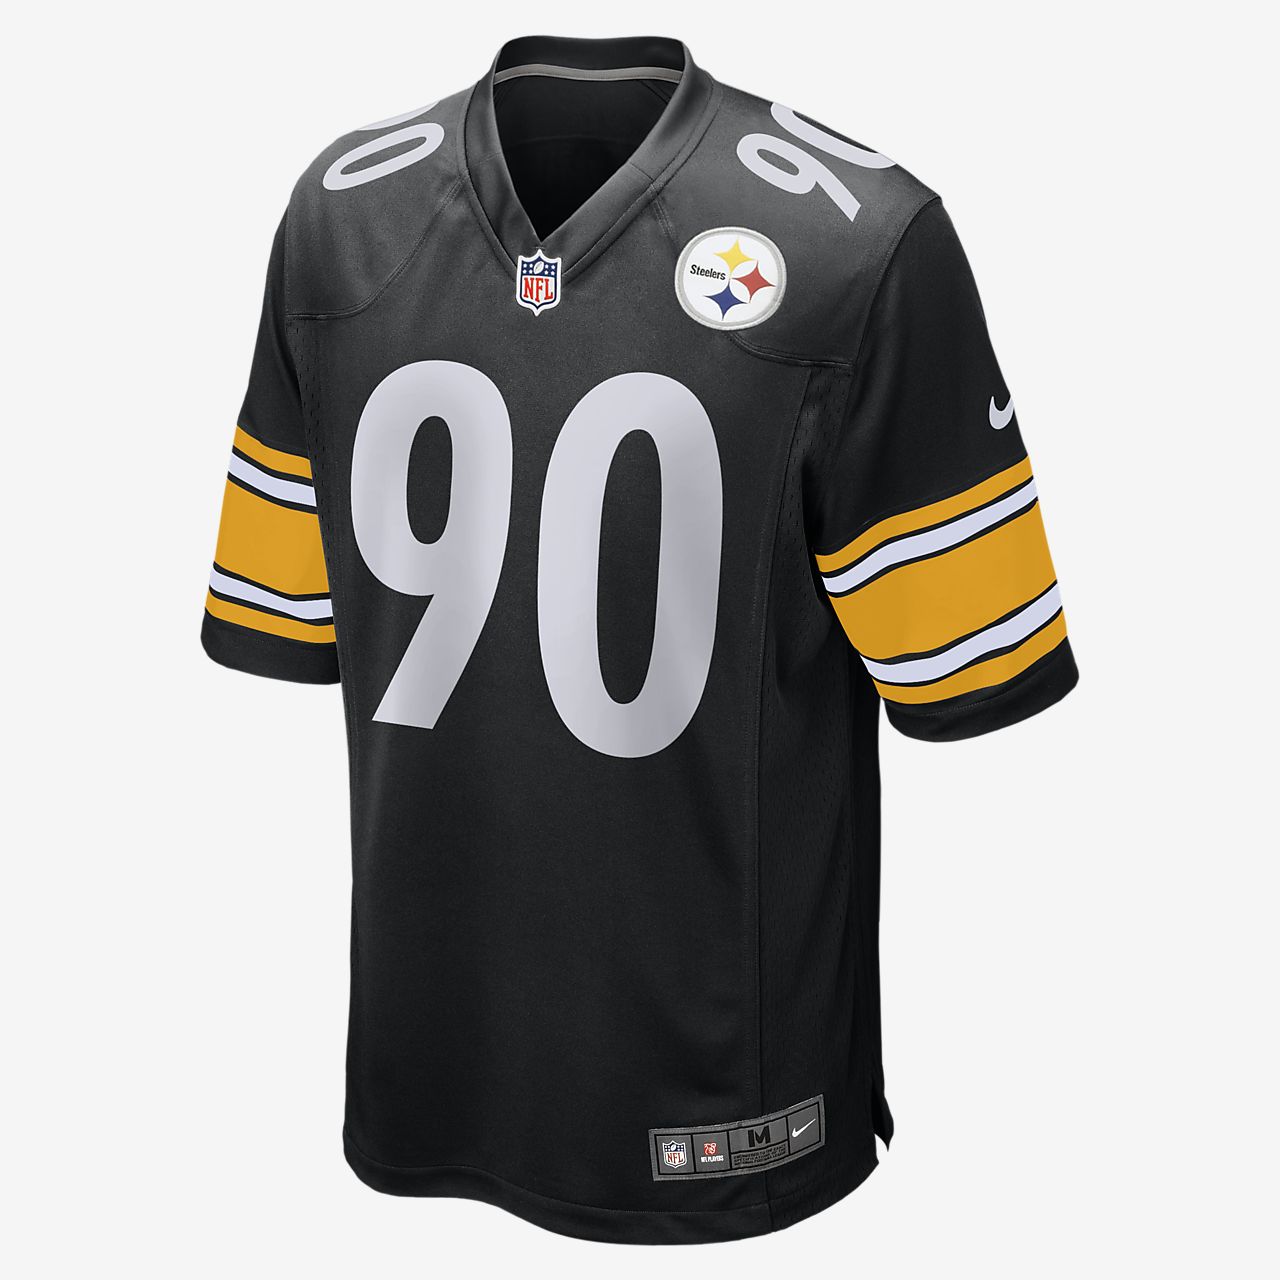 NFL Pittsburgh Steelers (T.J. Watt) Men's Game Football Jersey. Nike.com